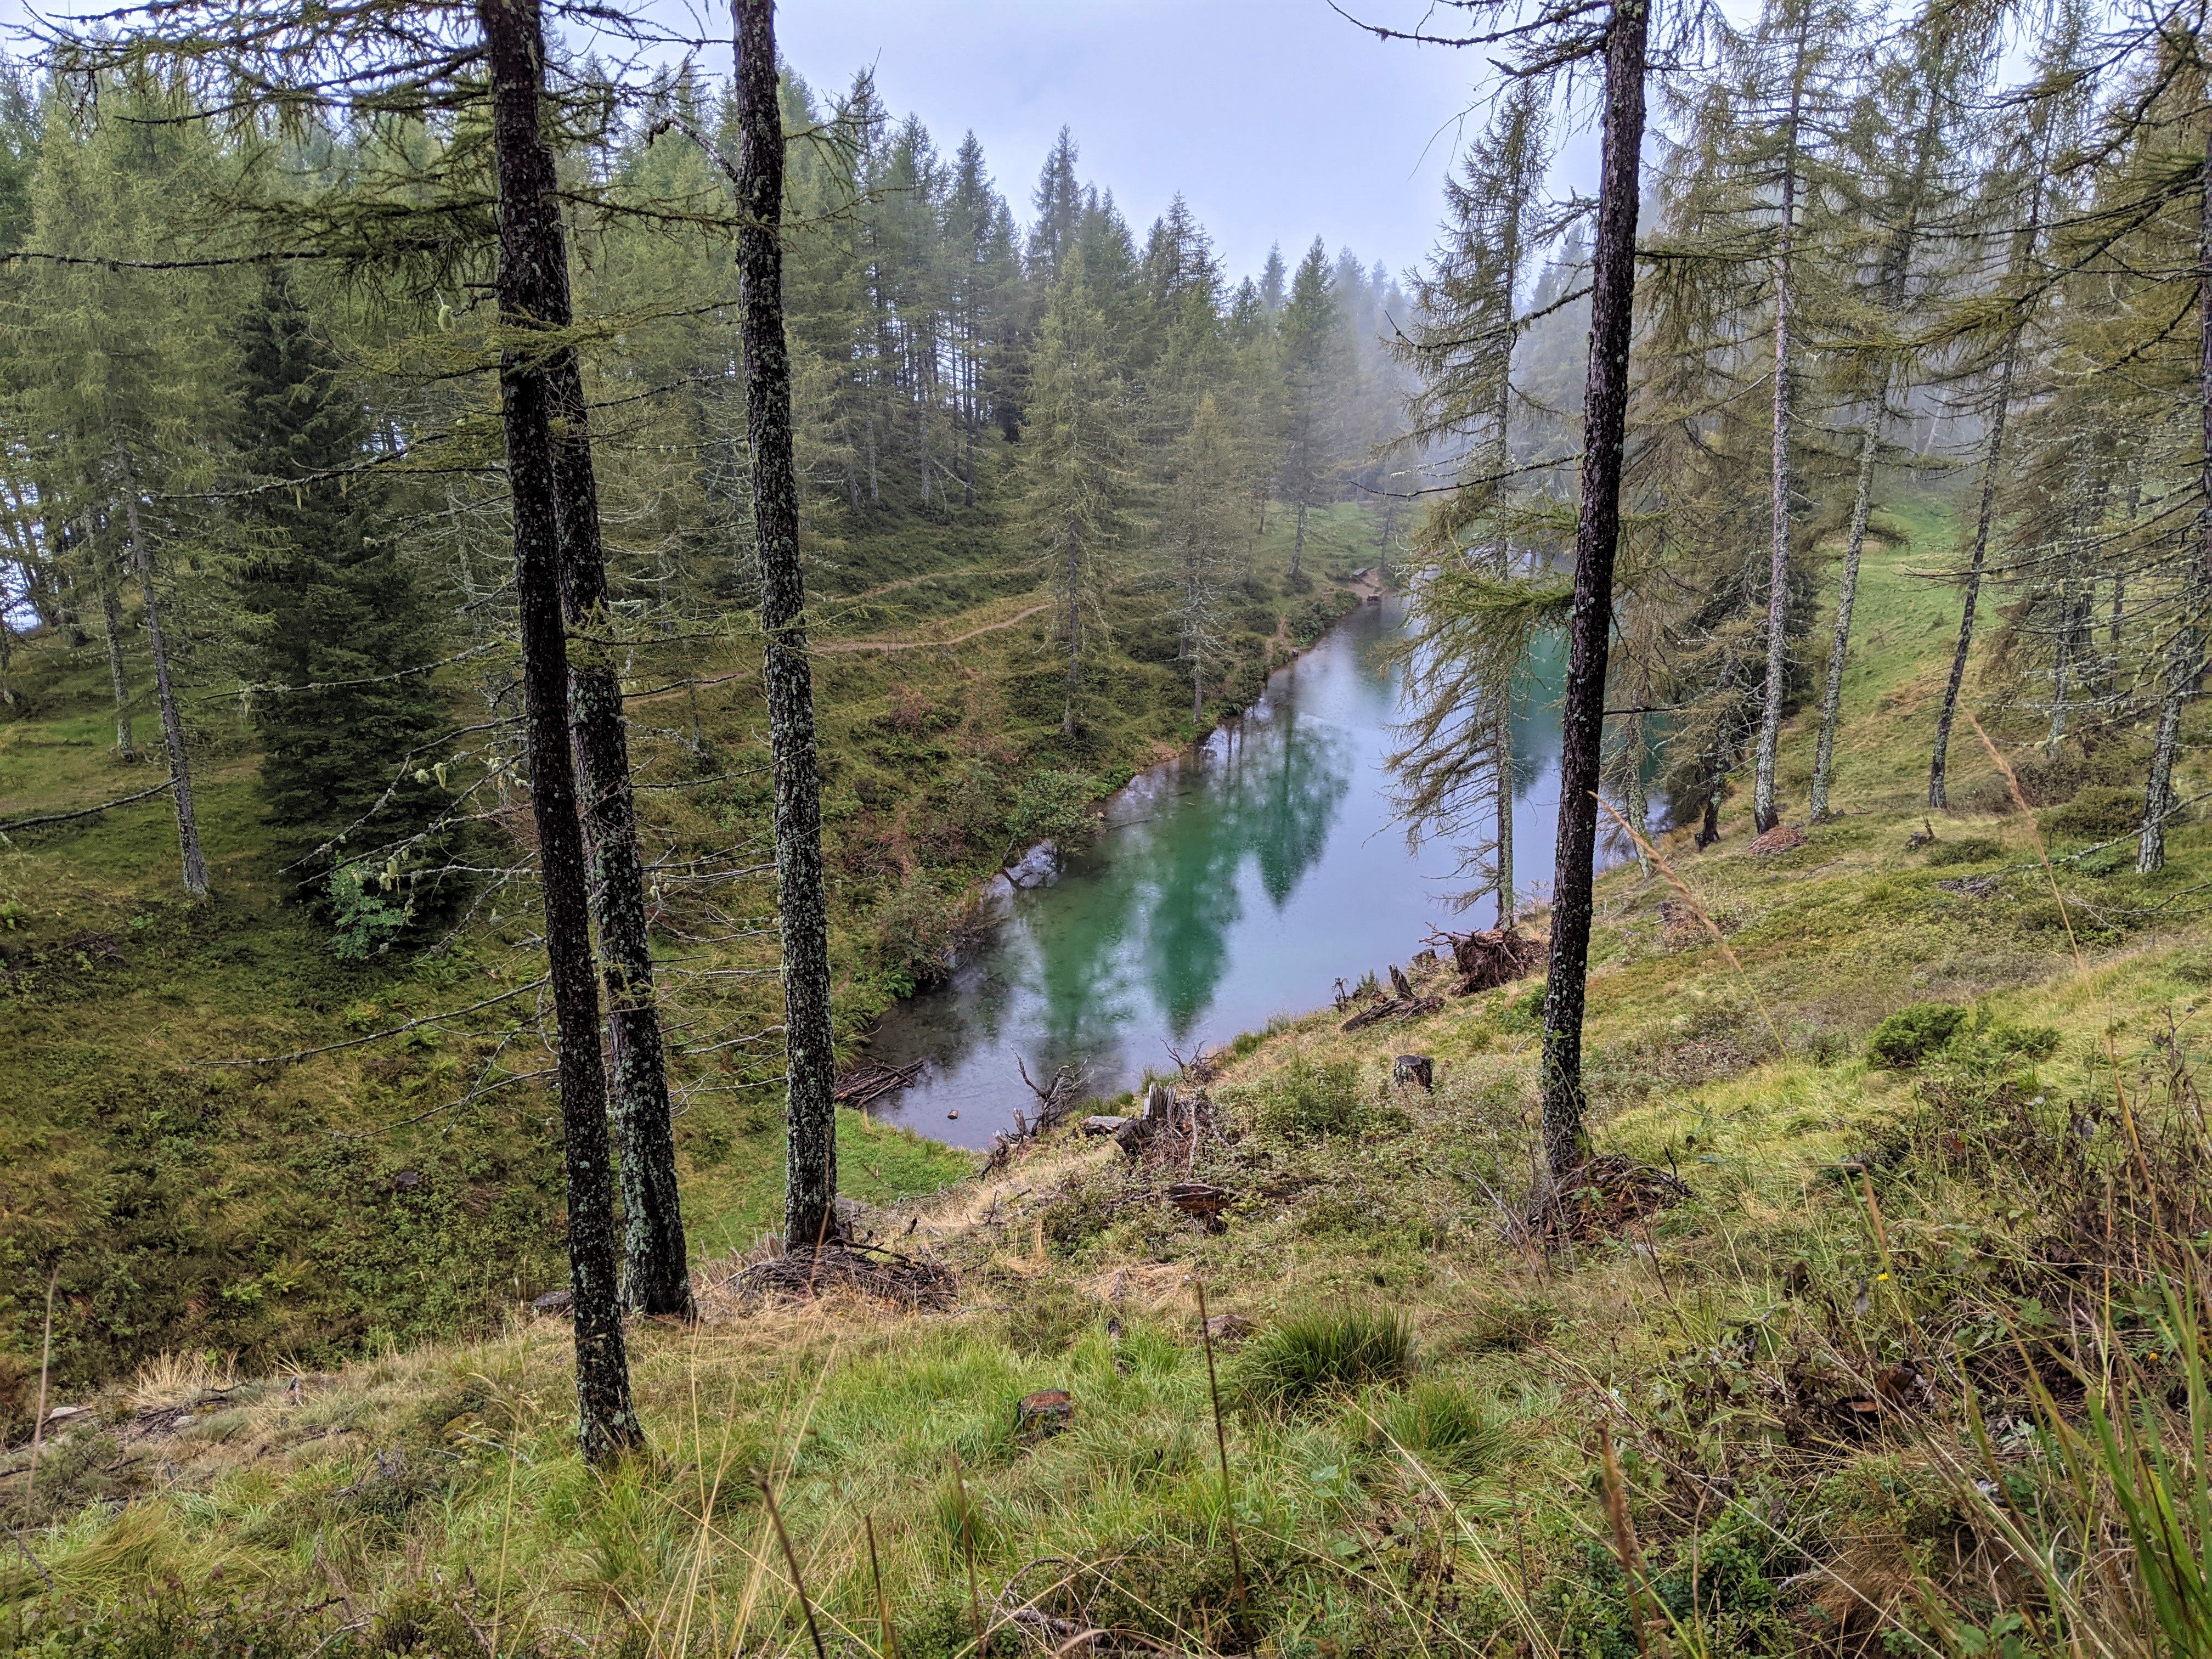 Lake and woodland in Italy’s Trentino region